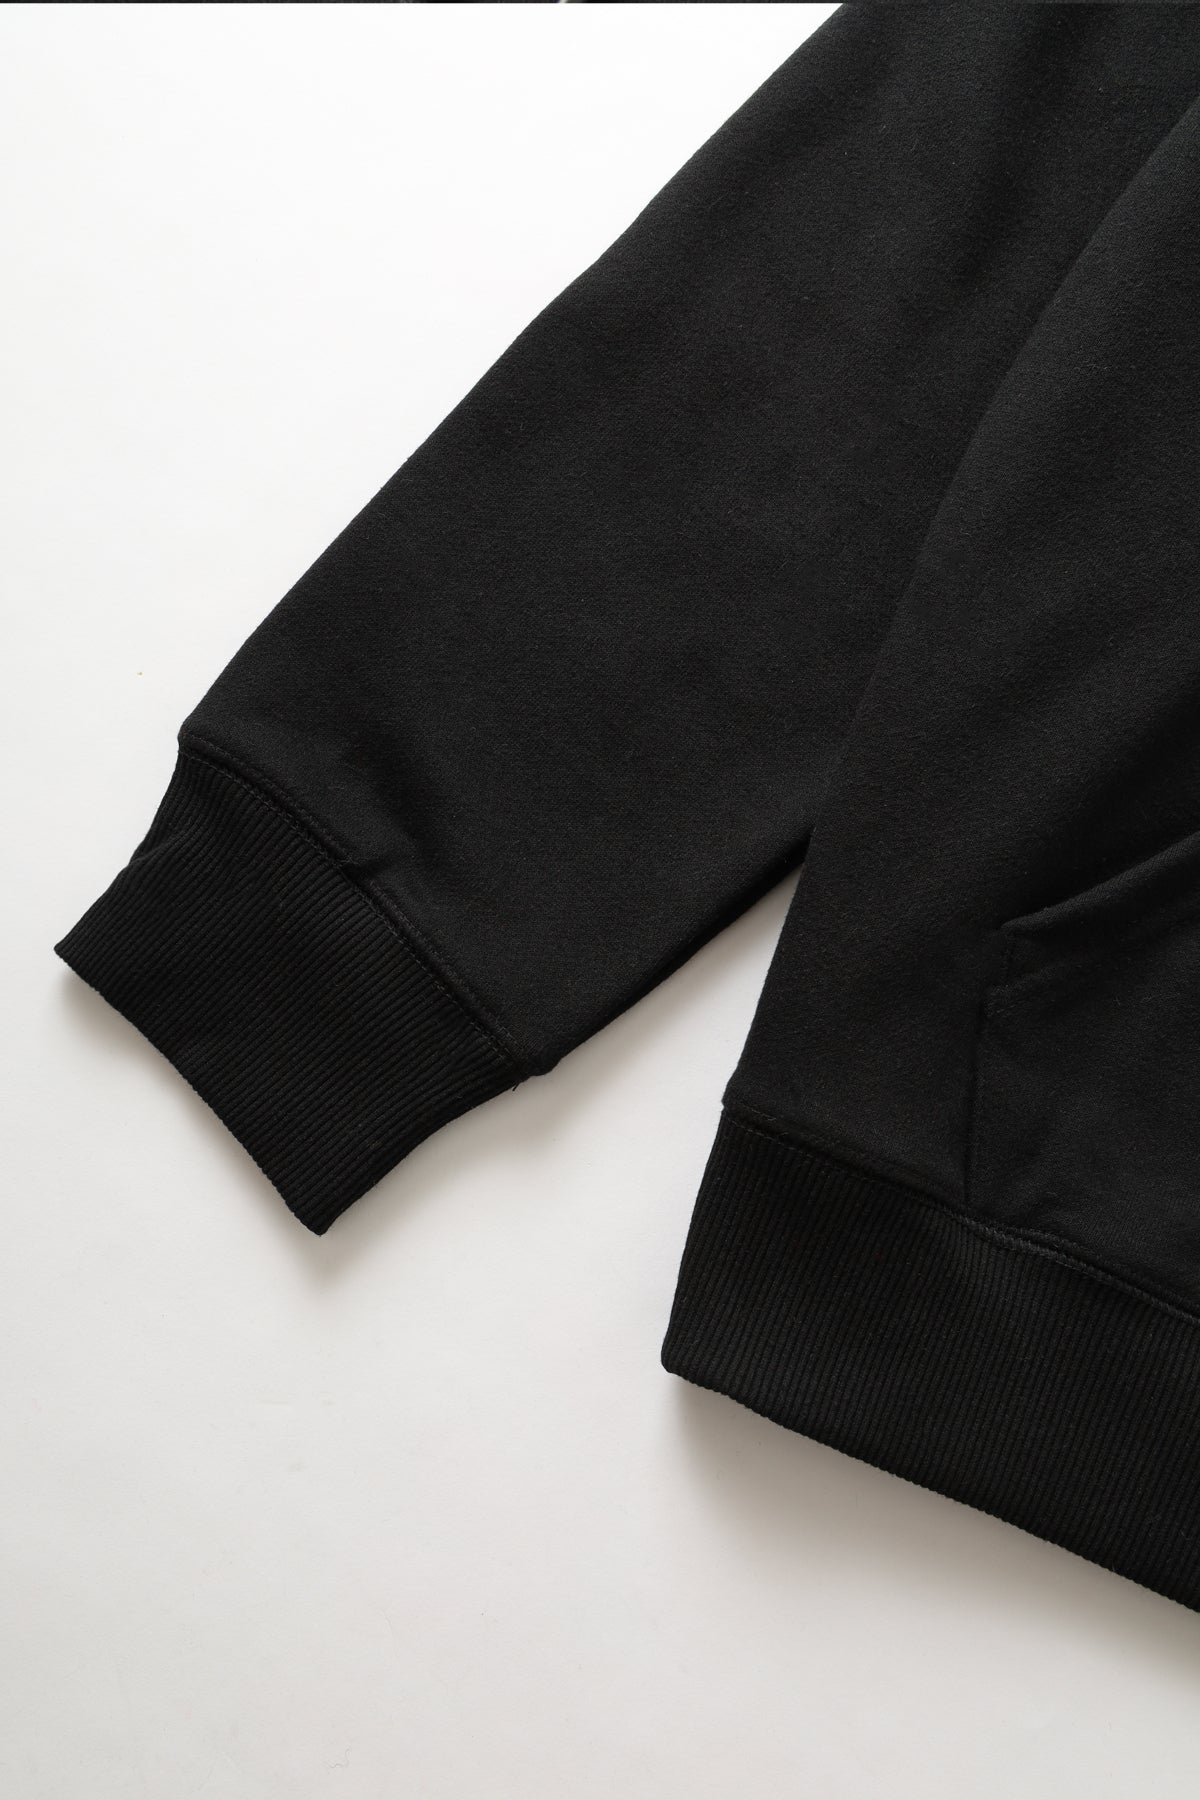 Pro Club - Hooded Pullover Sweatshirt - Black